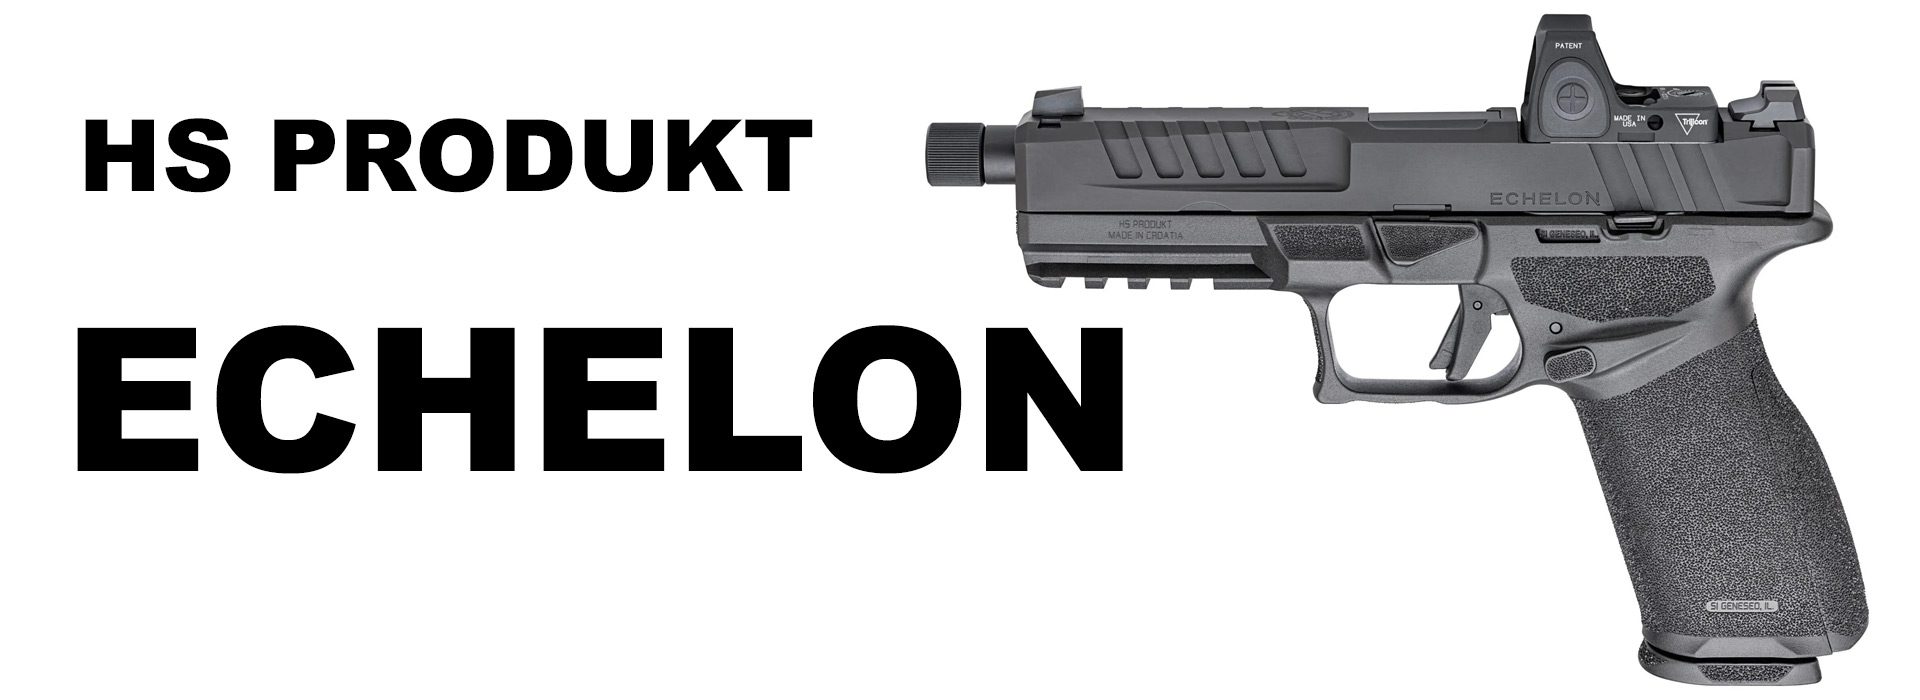 HS Produkt Echelon pištolj